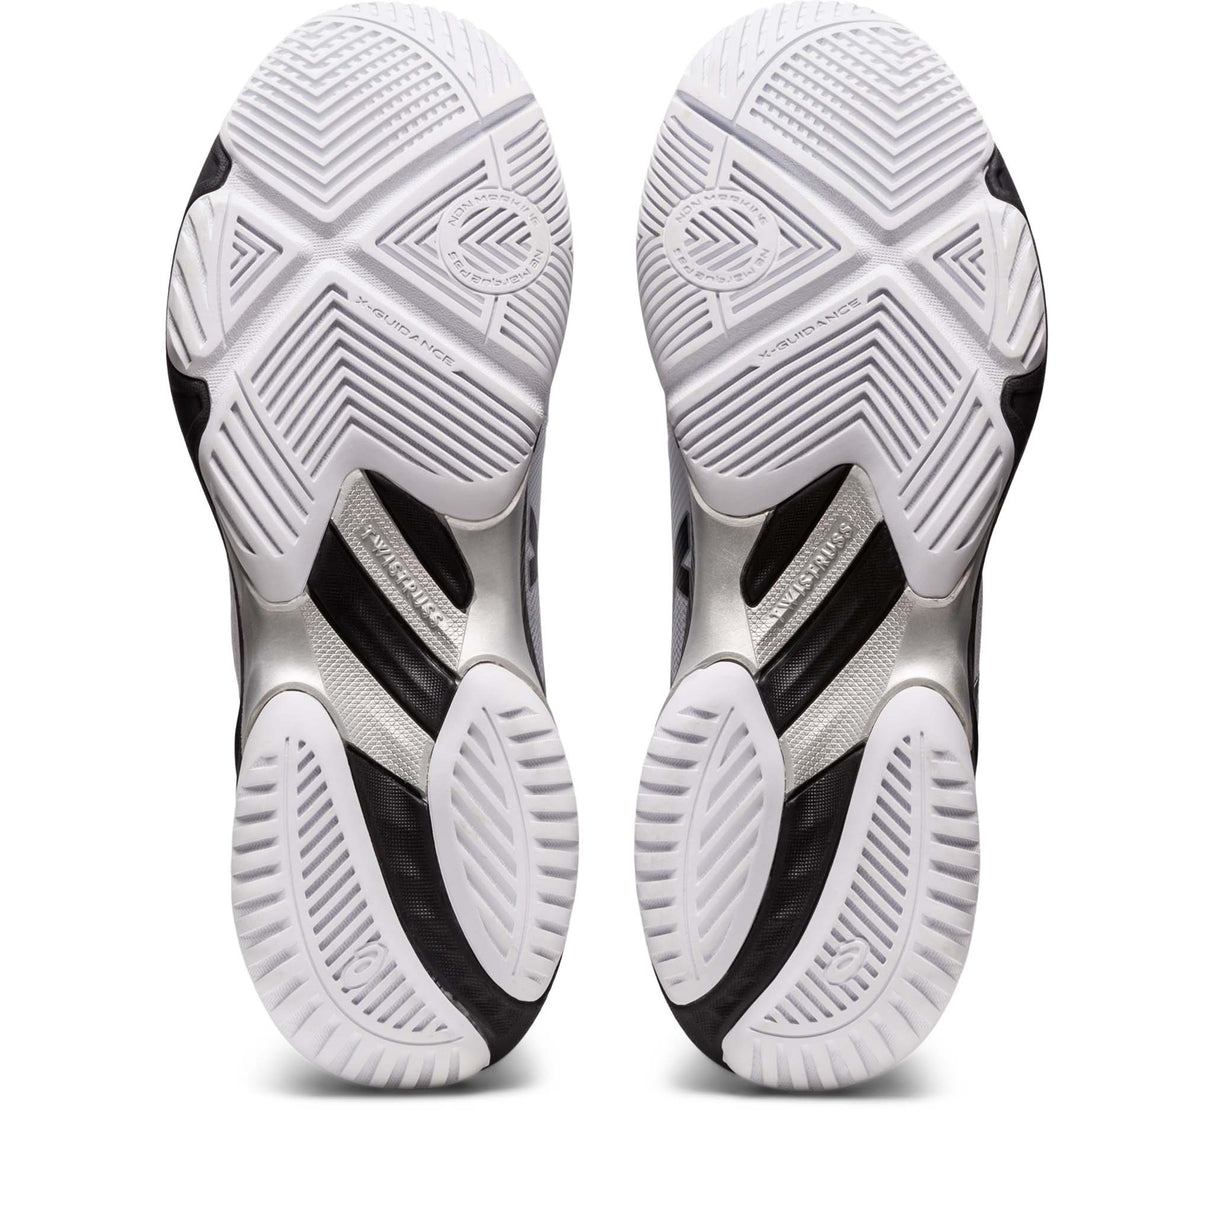 ASICS Netburner Ballistic FF MT 3 chaussures de volley-ball pour homme blanc noir semelle